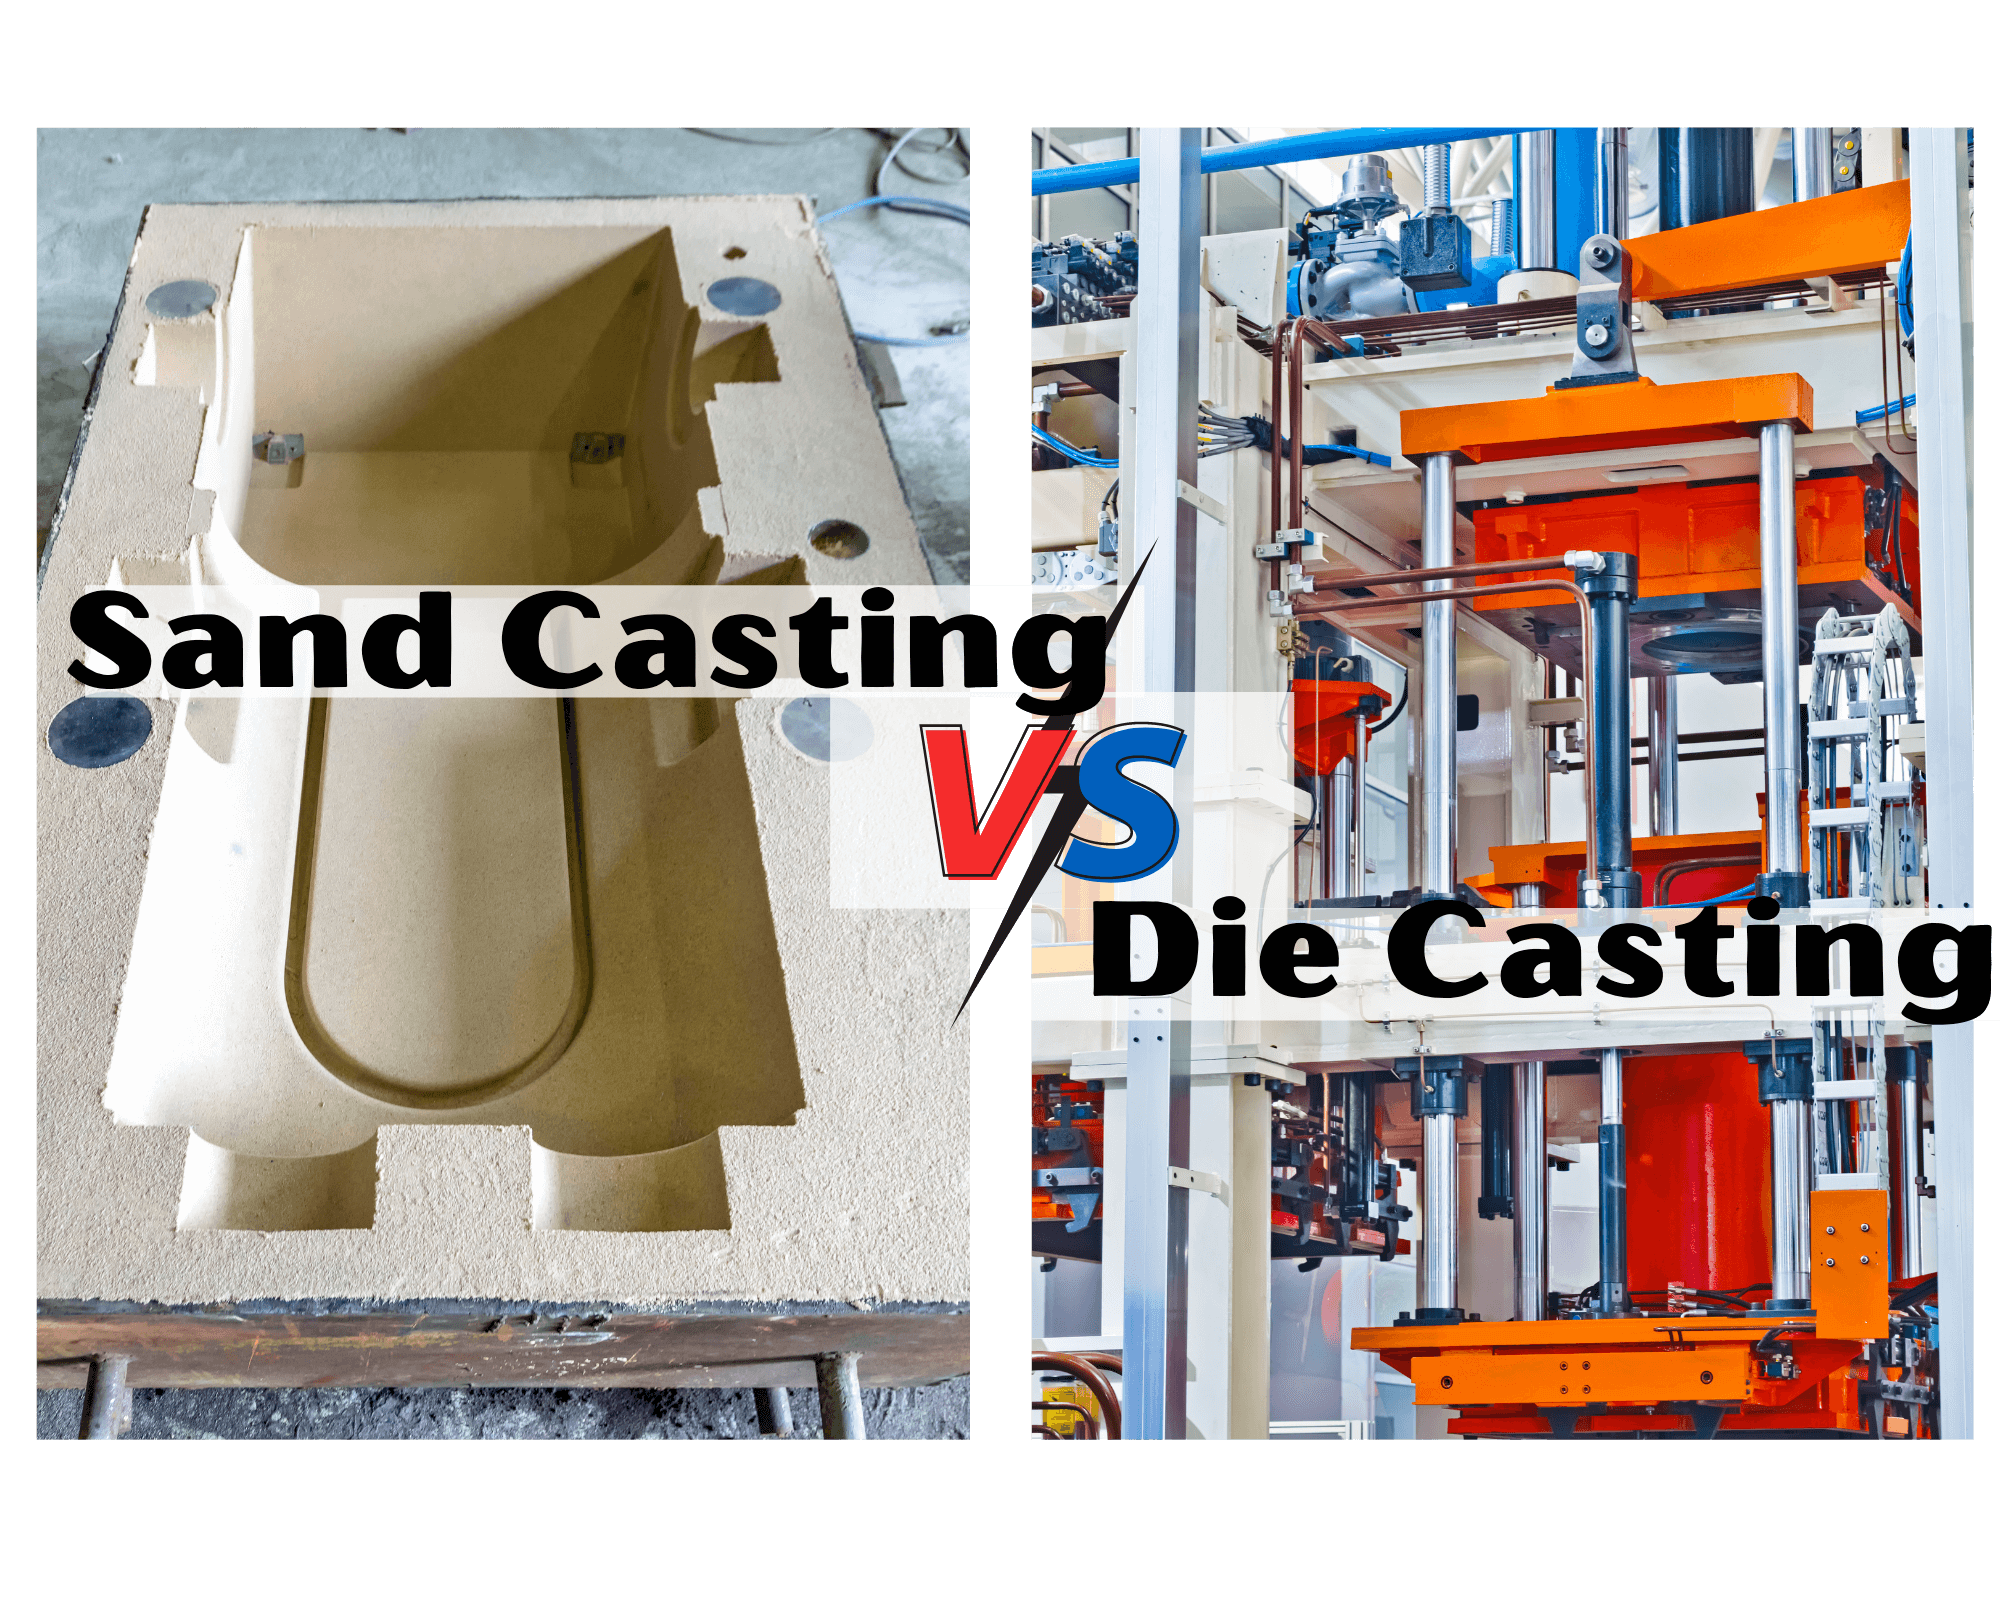 Sand Casting - Manufacturer of Complex Sand Castings | Impro Precision